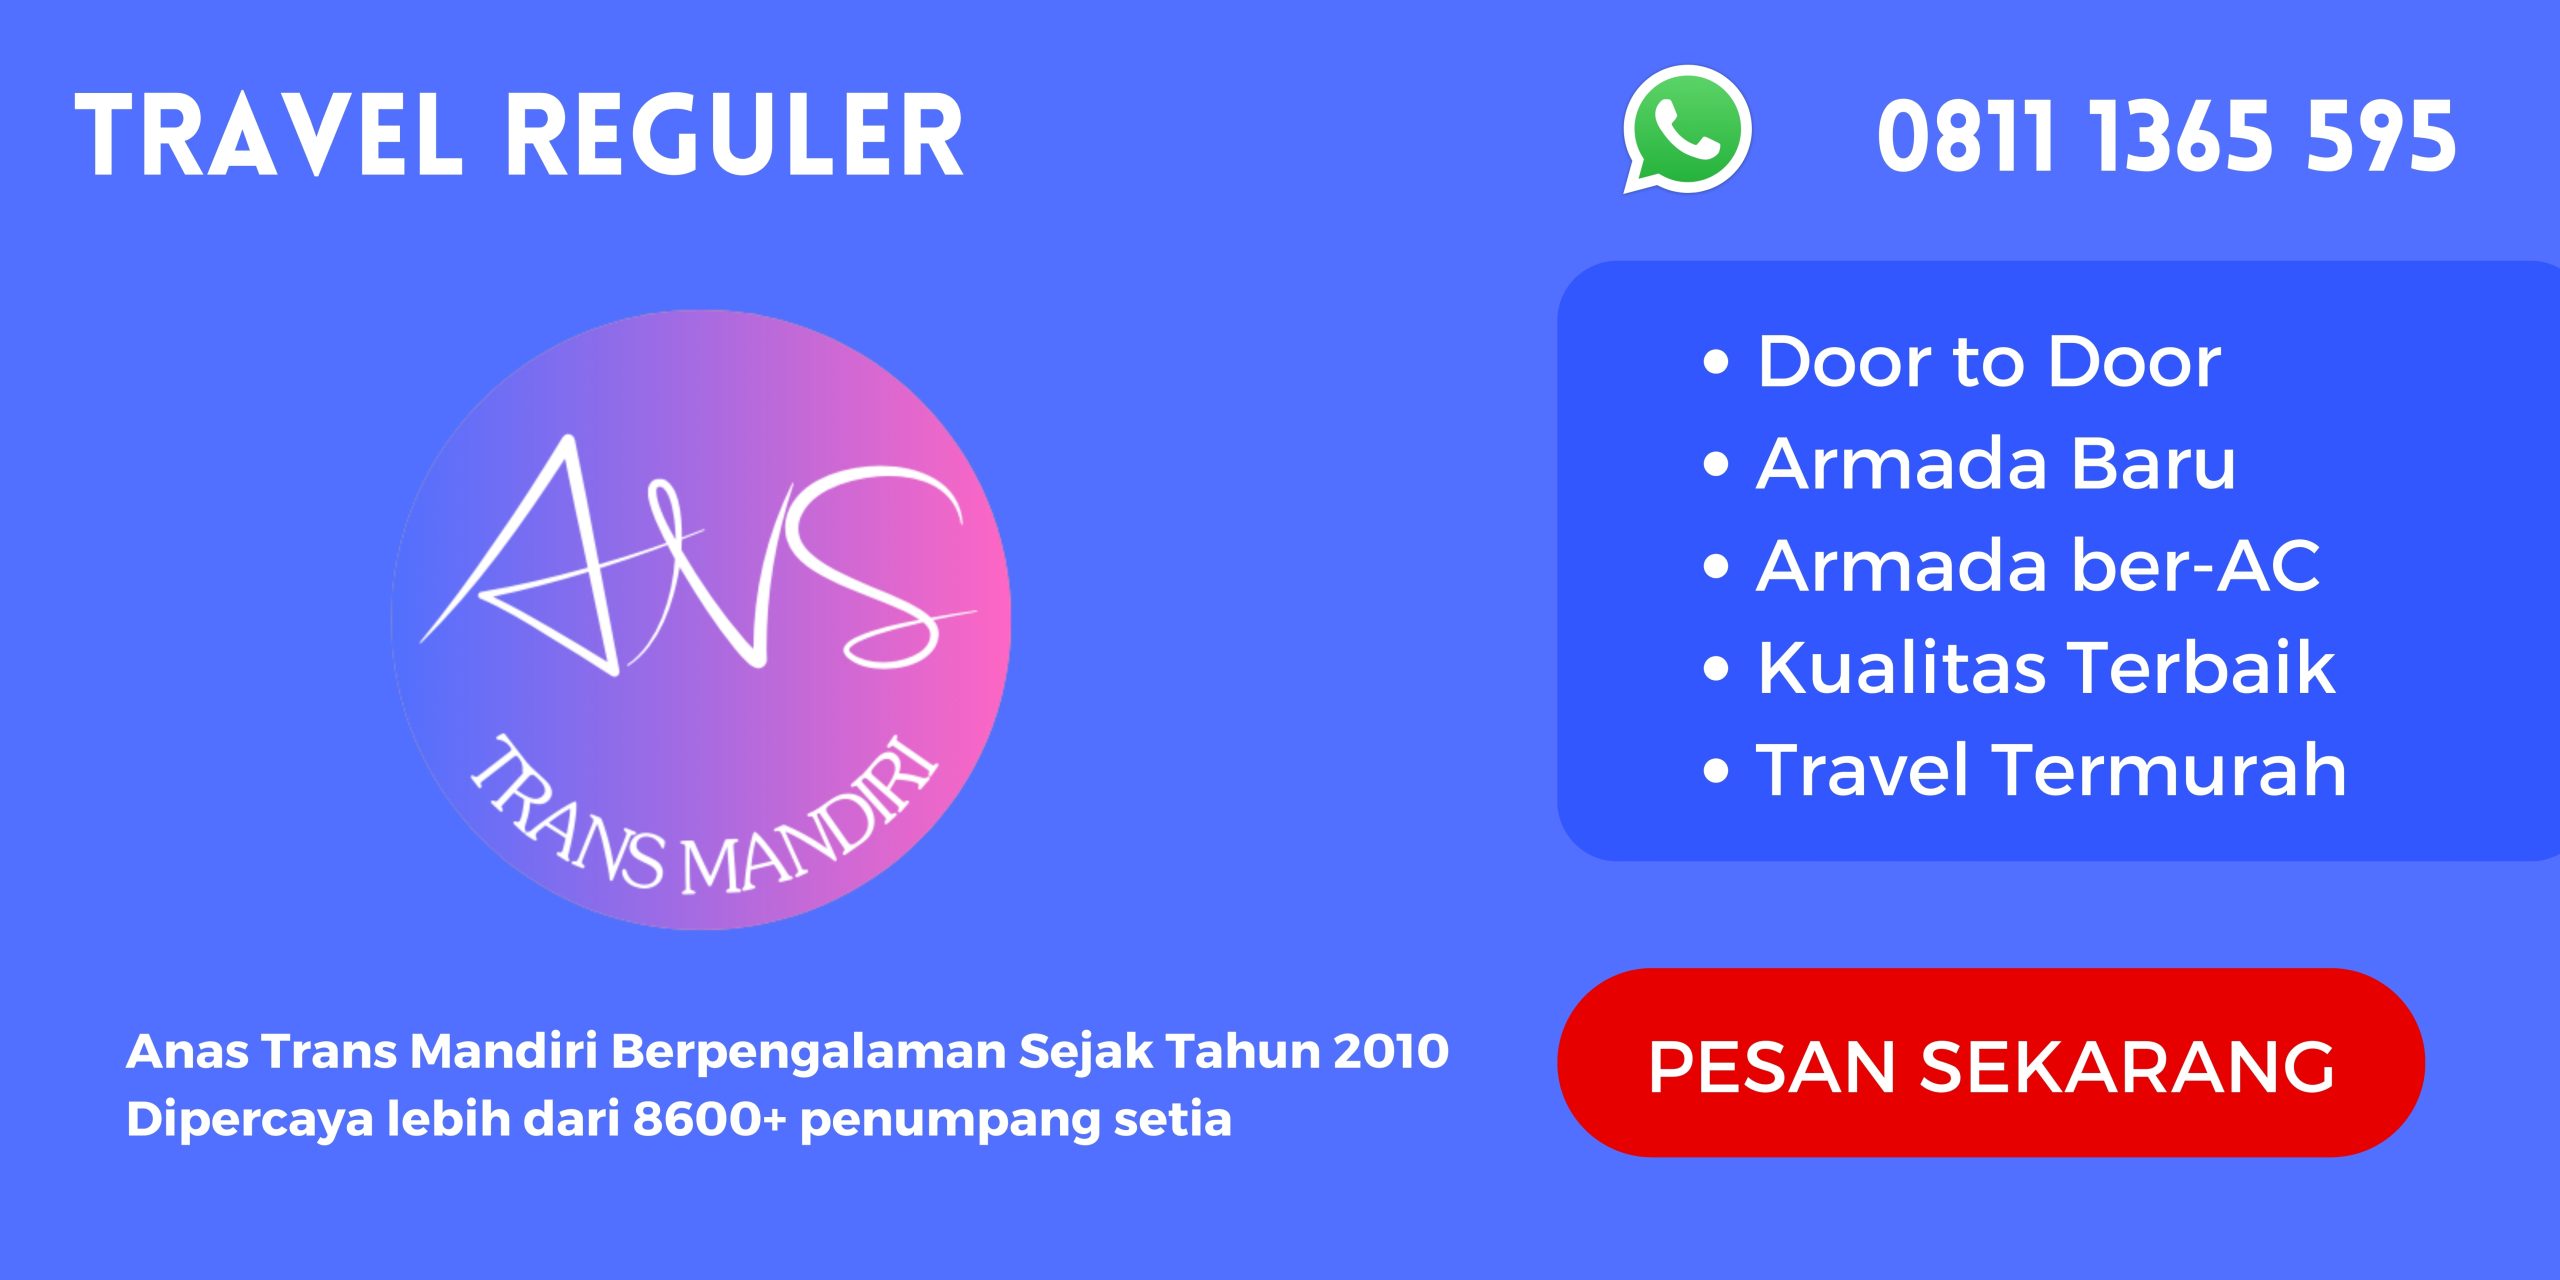 Travel Reguler - Banner Anas Trans Mandiri